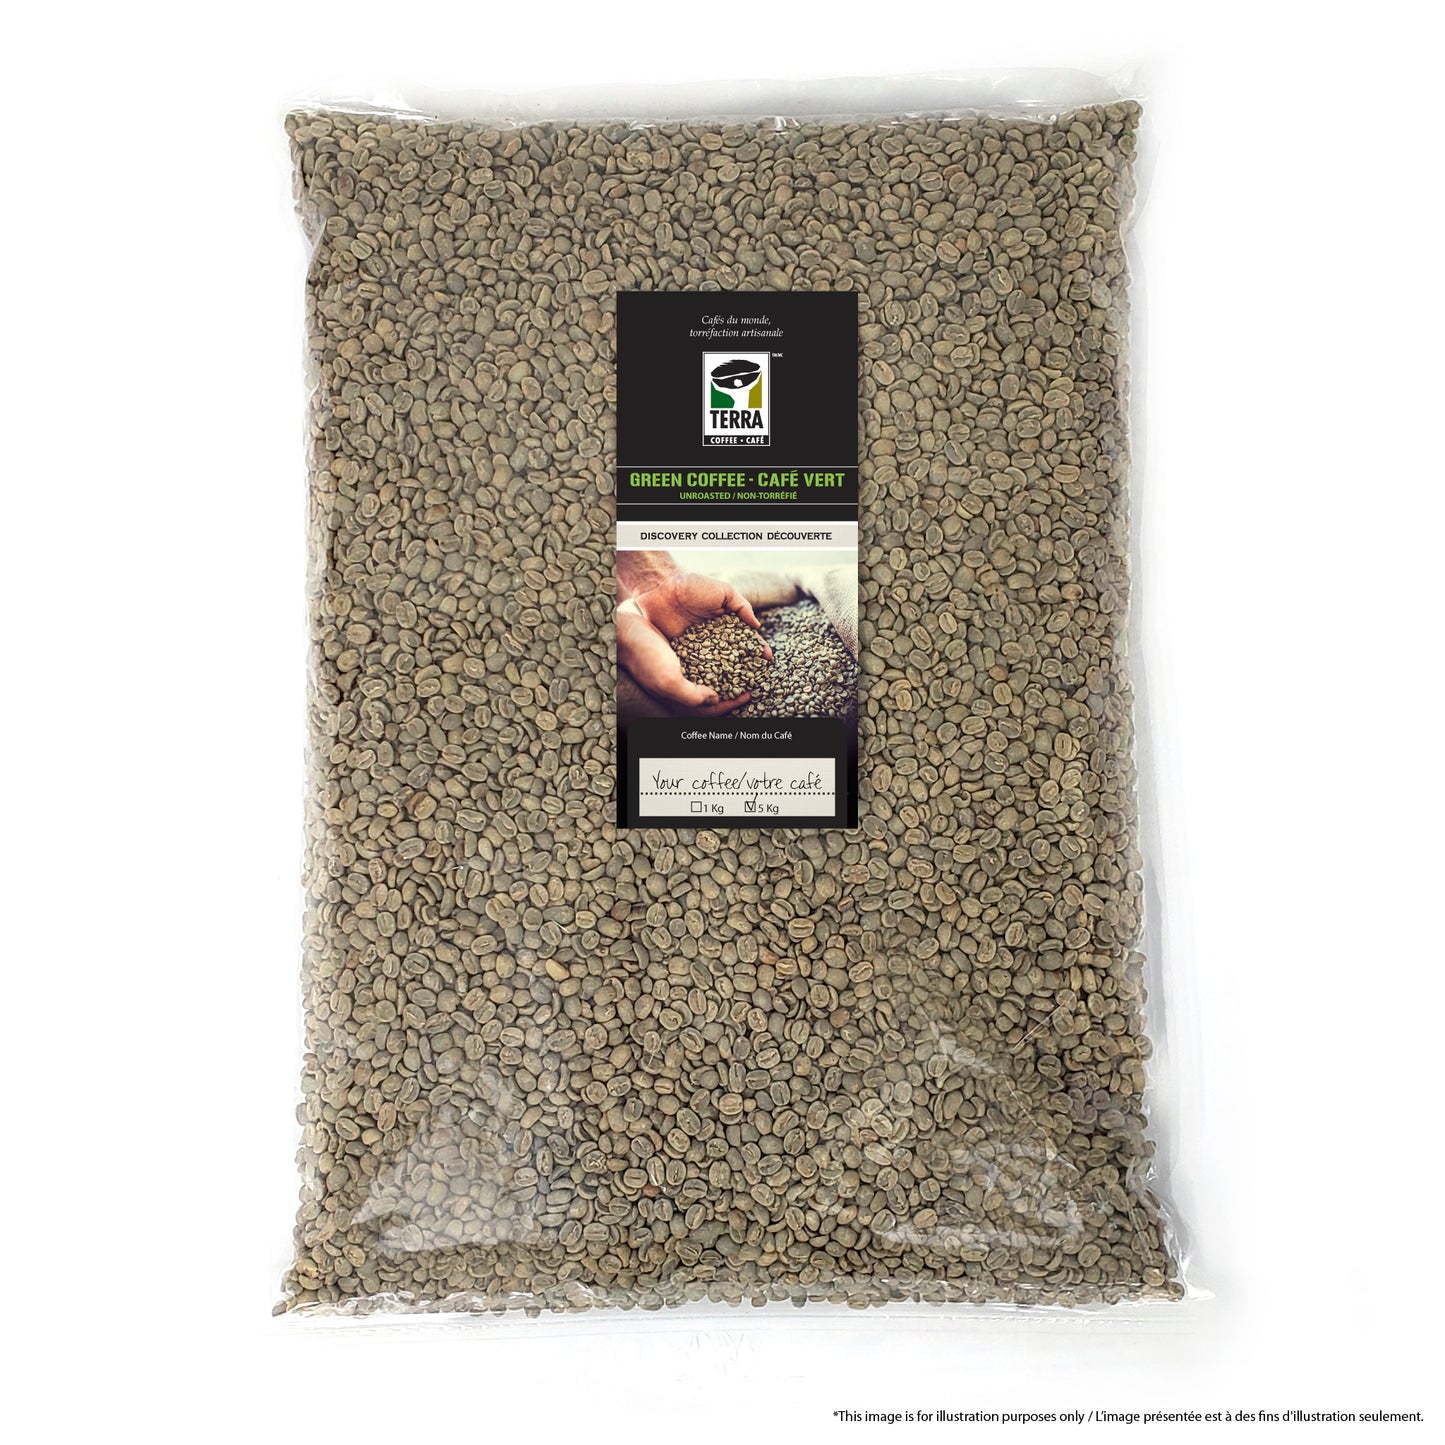 India Robusta Kaapi Royal - Certified RFA - Green Coffee